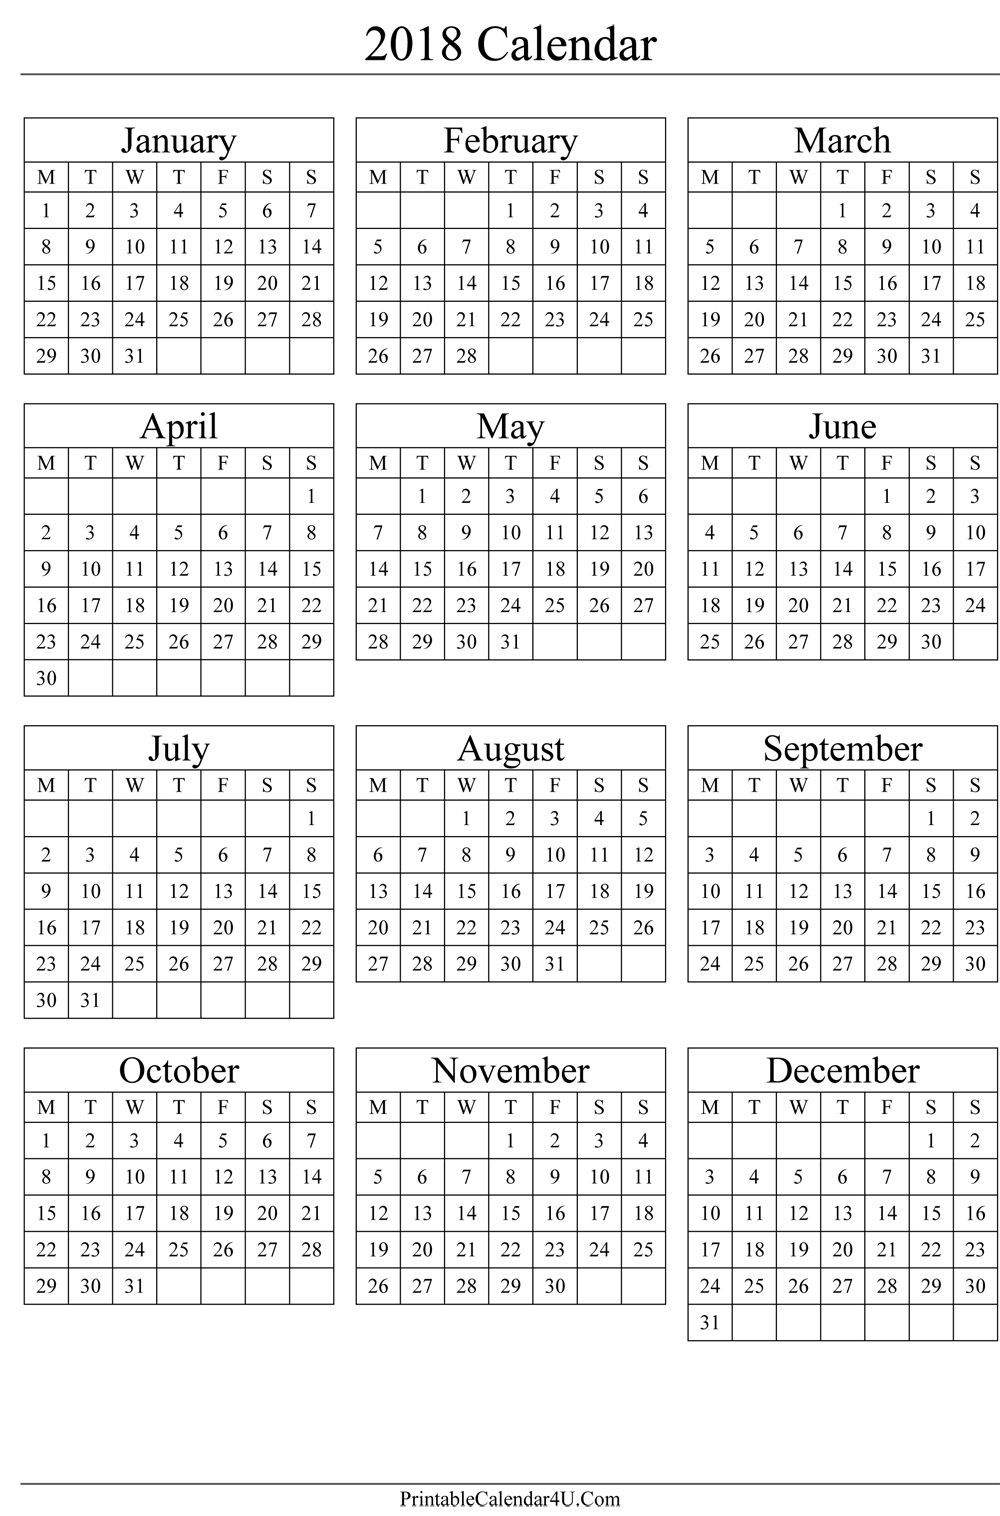 Pincalendar Printable On 2018 Calendar | Printable